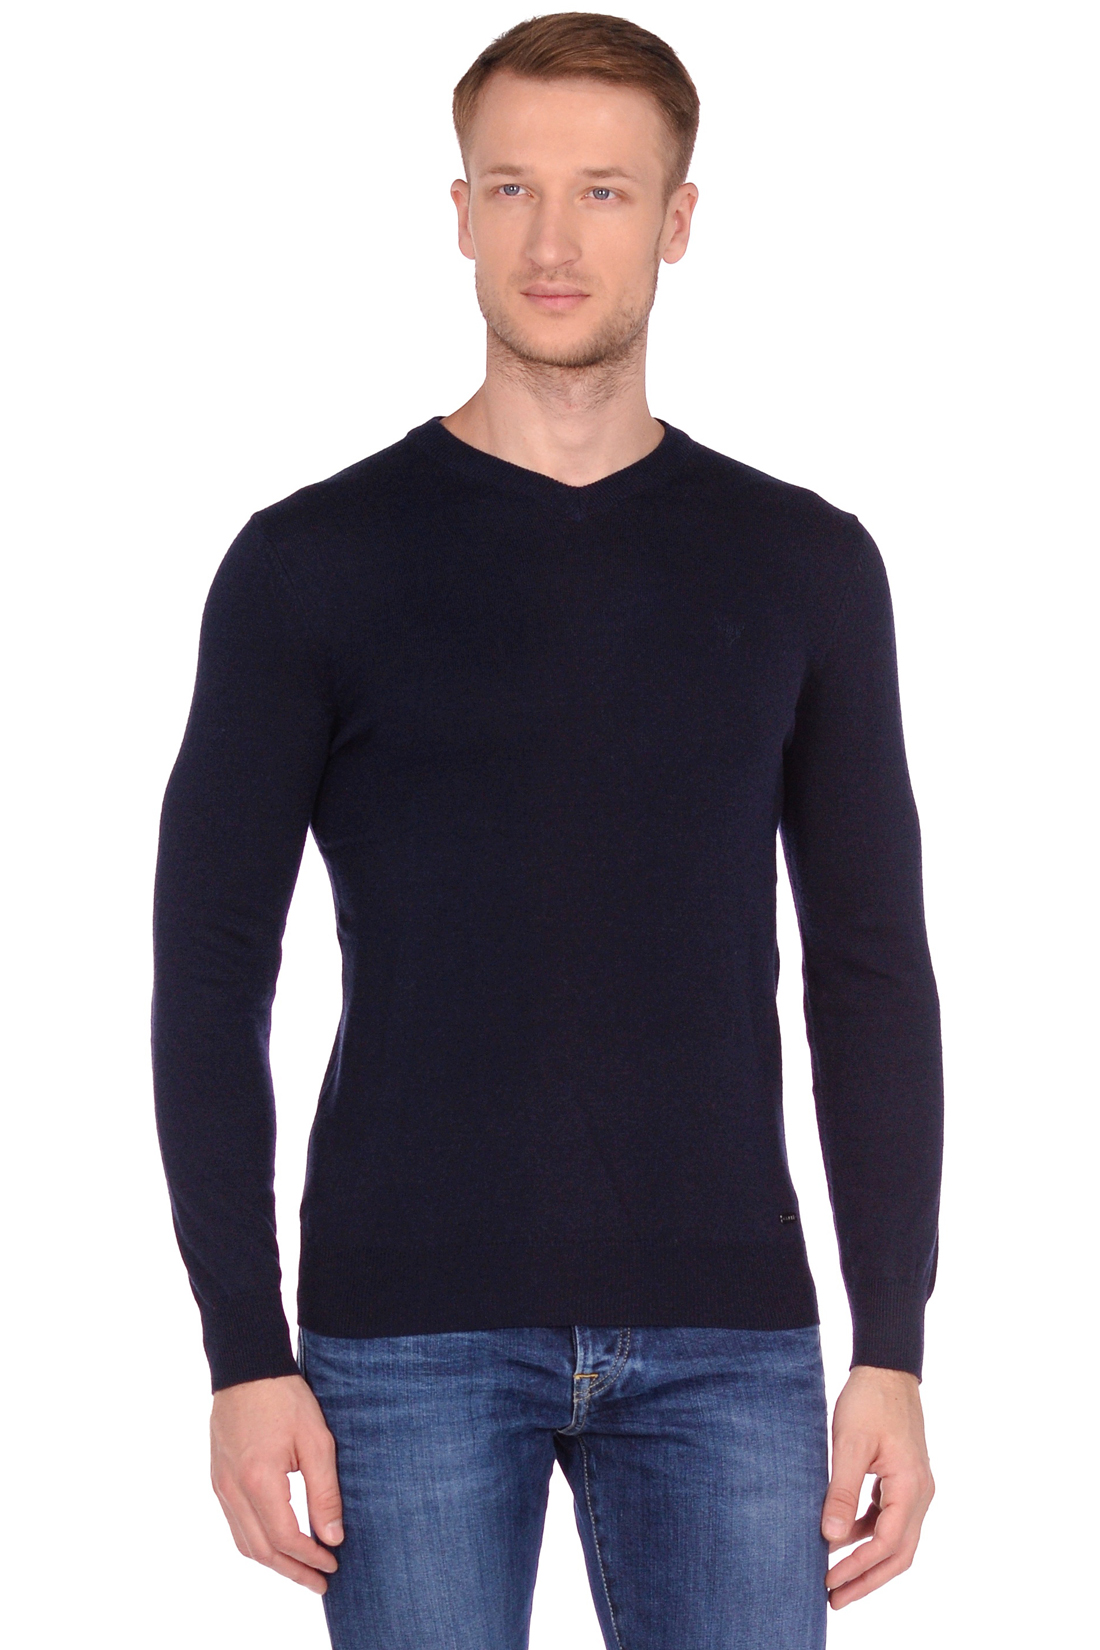 Базовый пуловер (арт. baon B638703), размер L, цвет deep navy melange#синий Базовый пуловер (арт. baon B638703) - фото 1